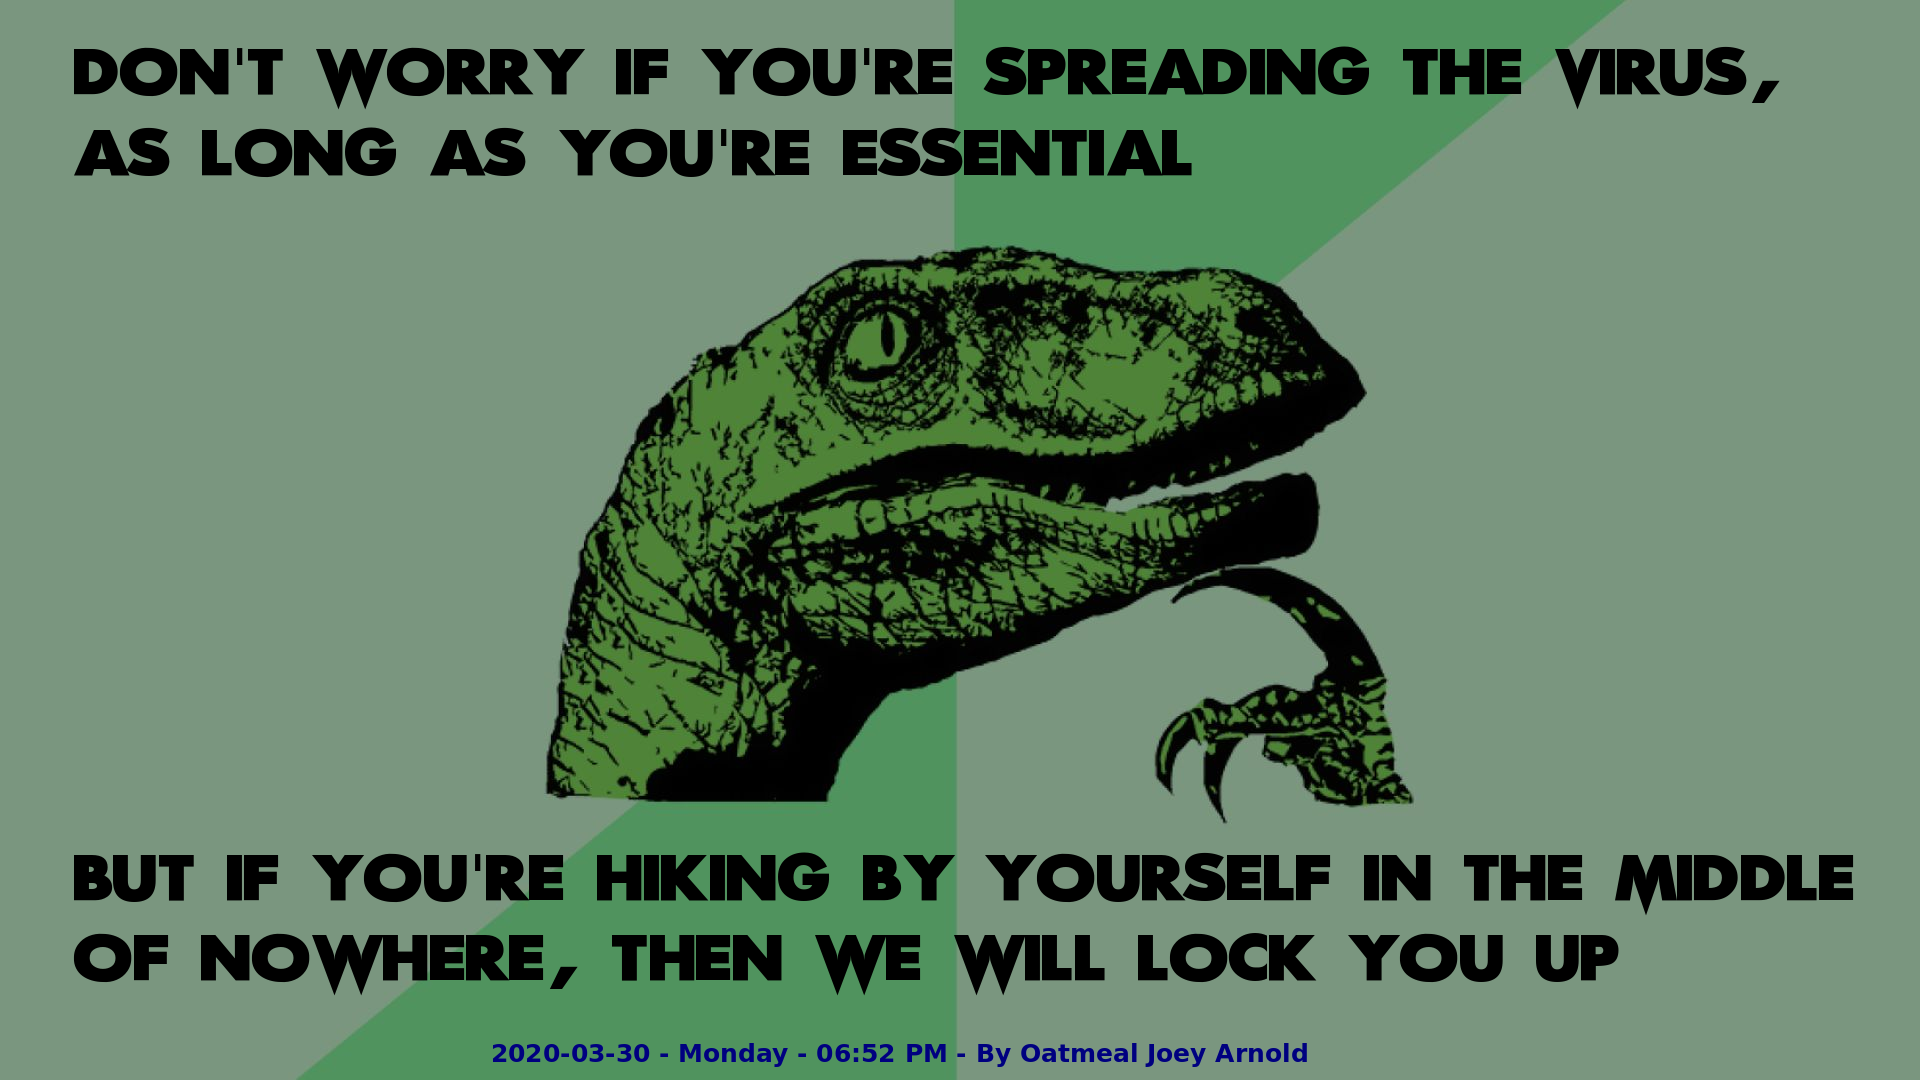 Dinosaur Virus Essential Spread ok But Alone Hiking Locking Ya Up - 2020-03-30 - Monday - 06:57 PM.png